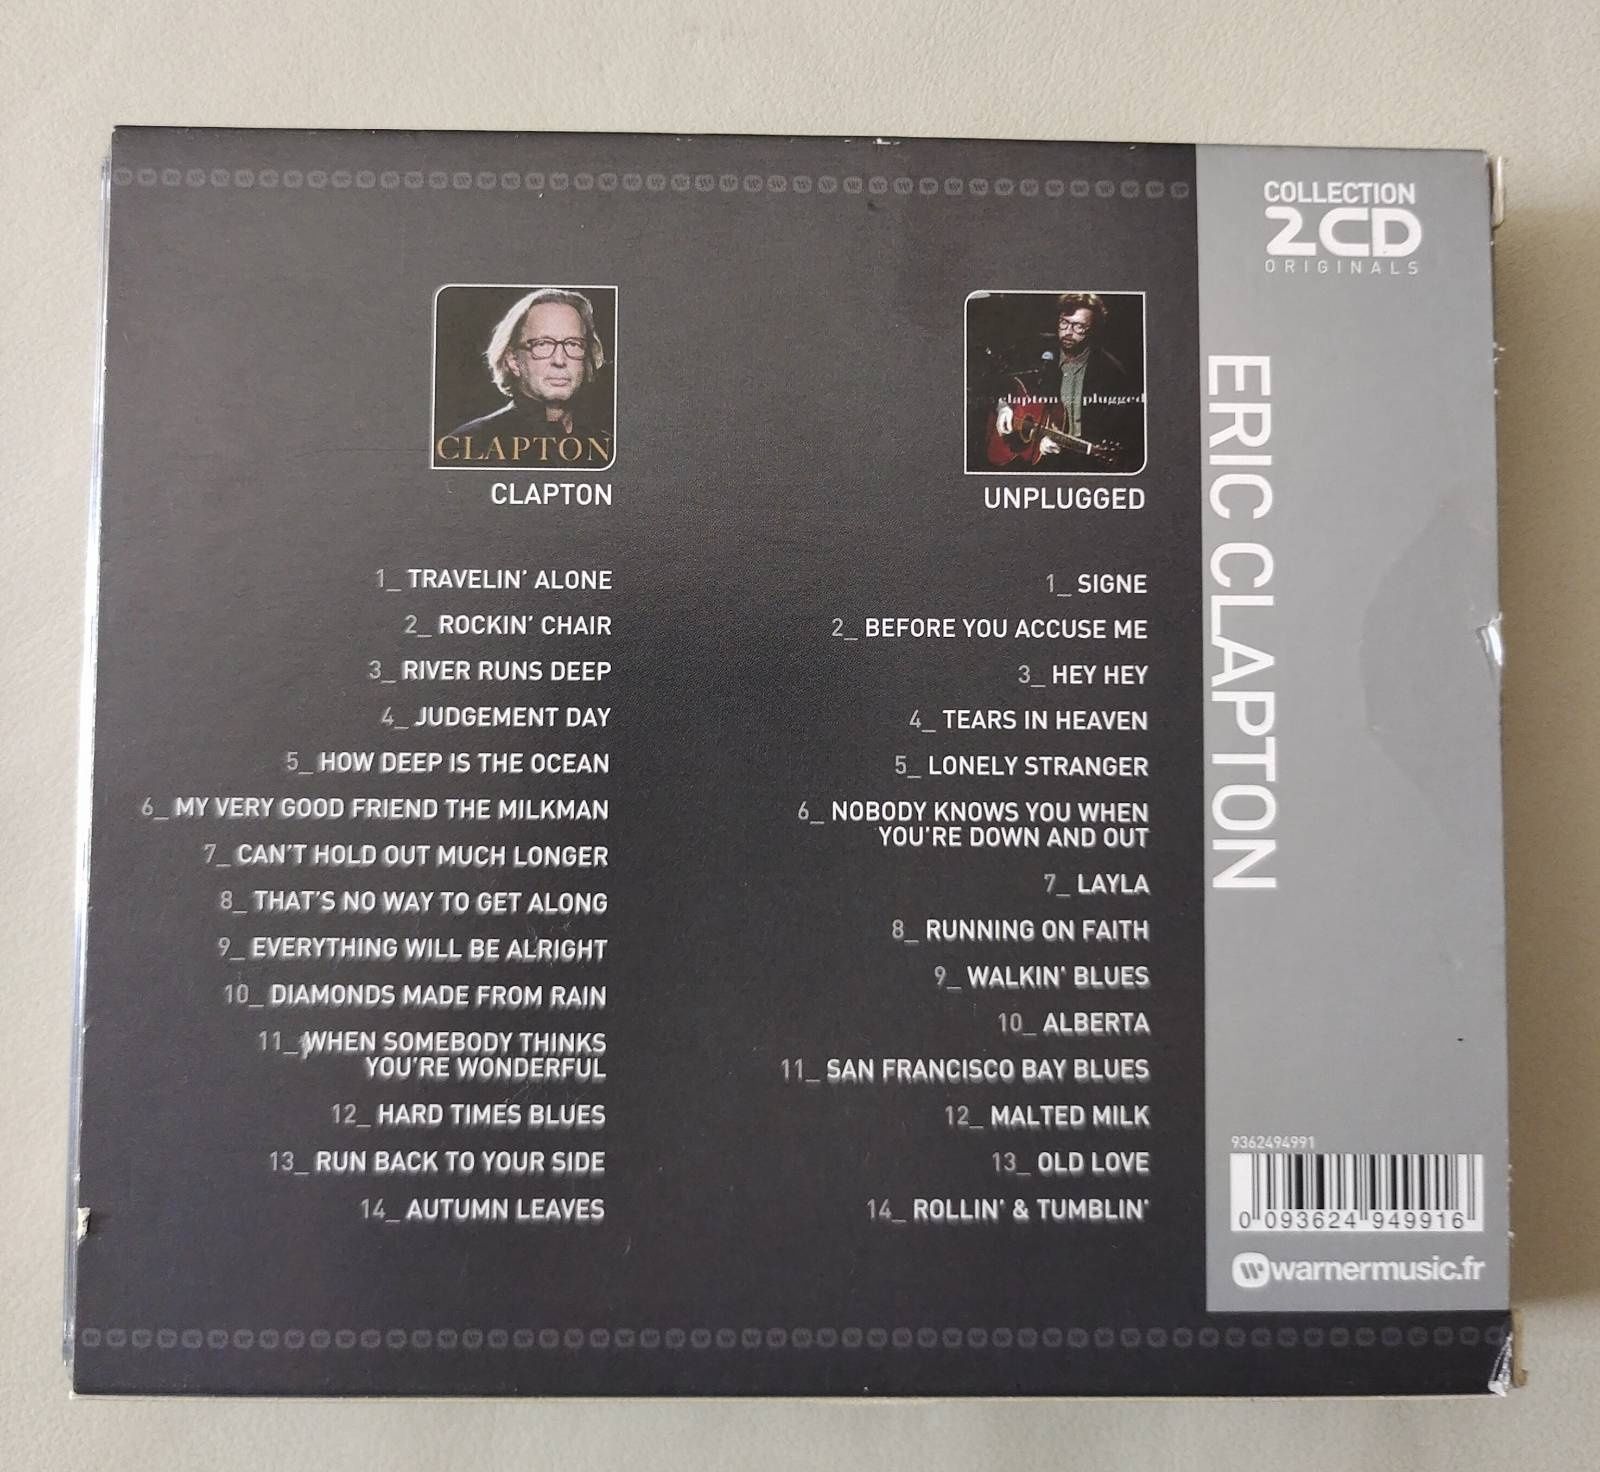 CLAPTON, Eric Clapton Collection 2 CD